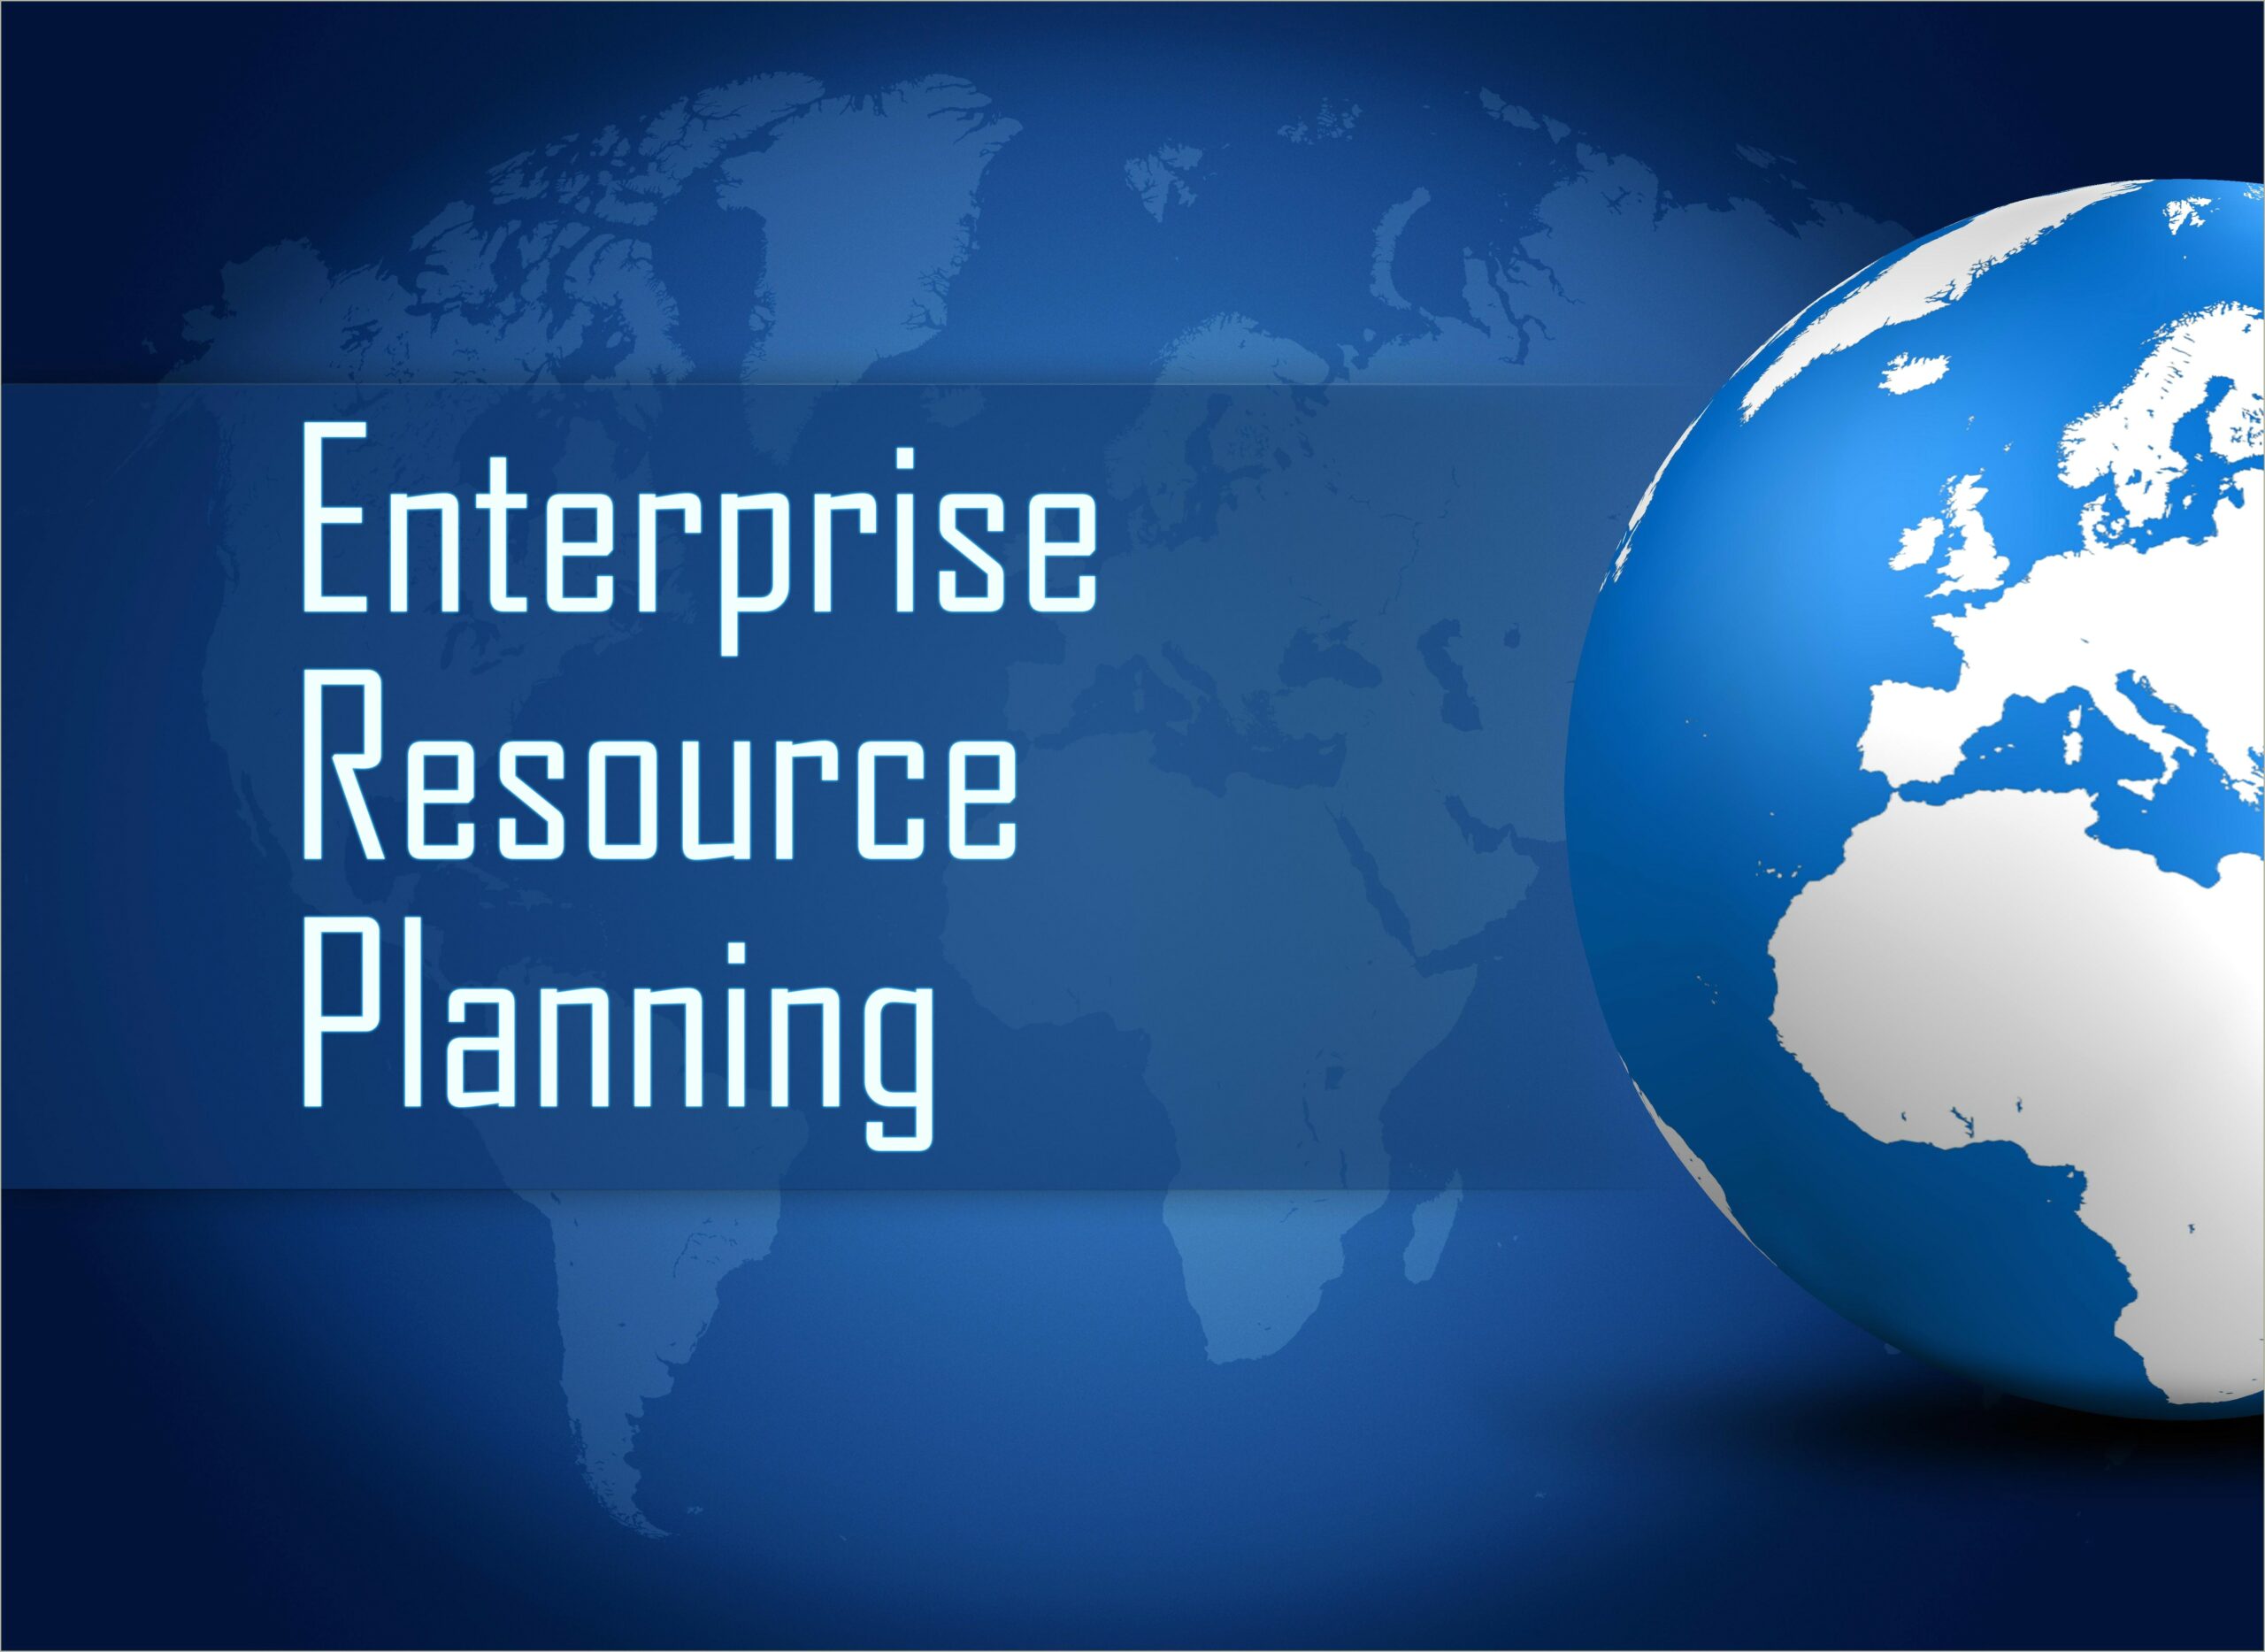 Free Enterprise Resource Planning Powerpoint Template